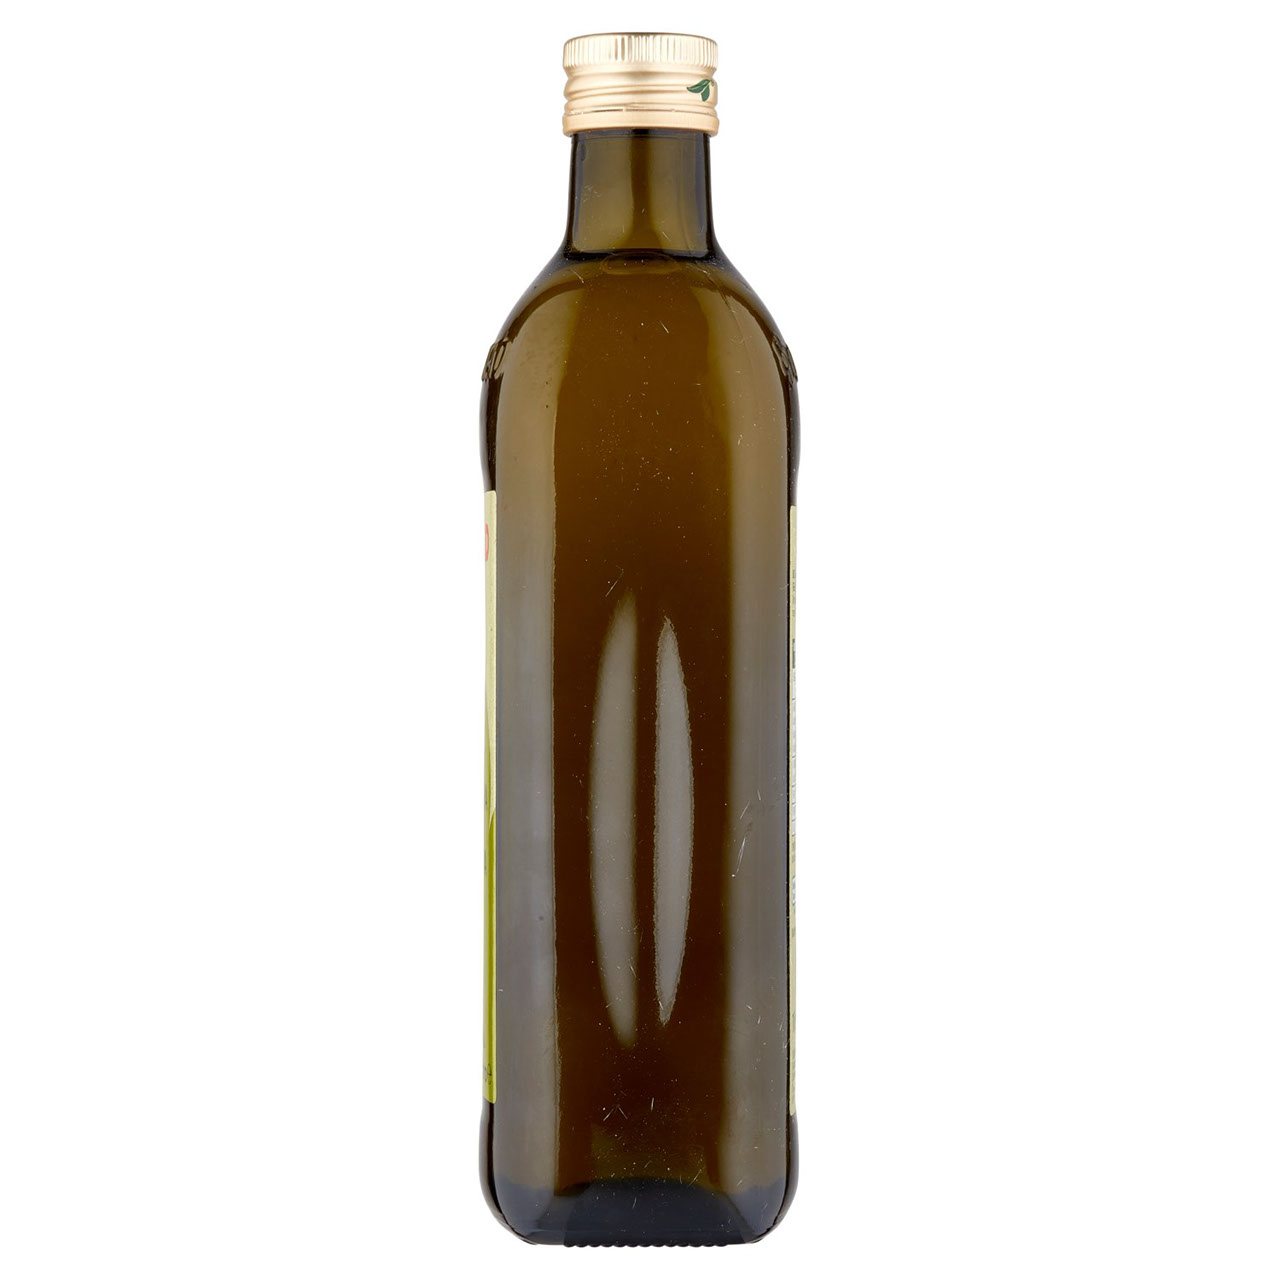 Olio di Oliva 1 litro Conad in vendita online